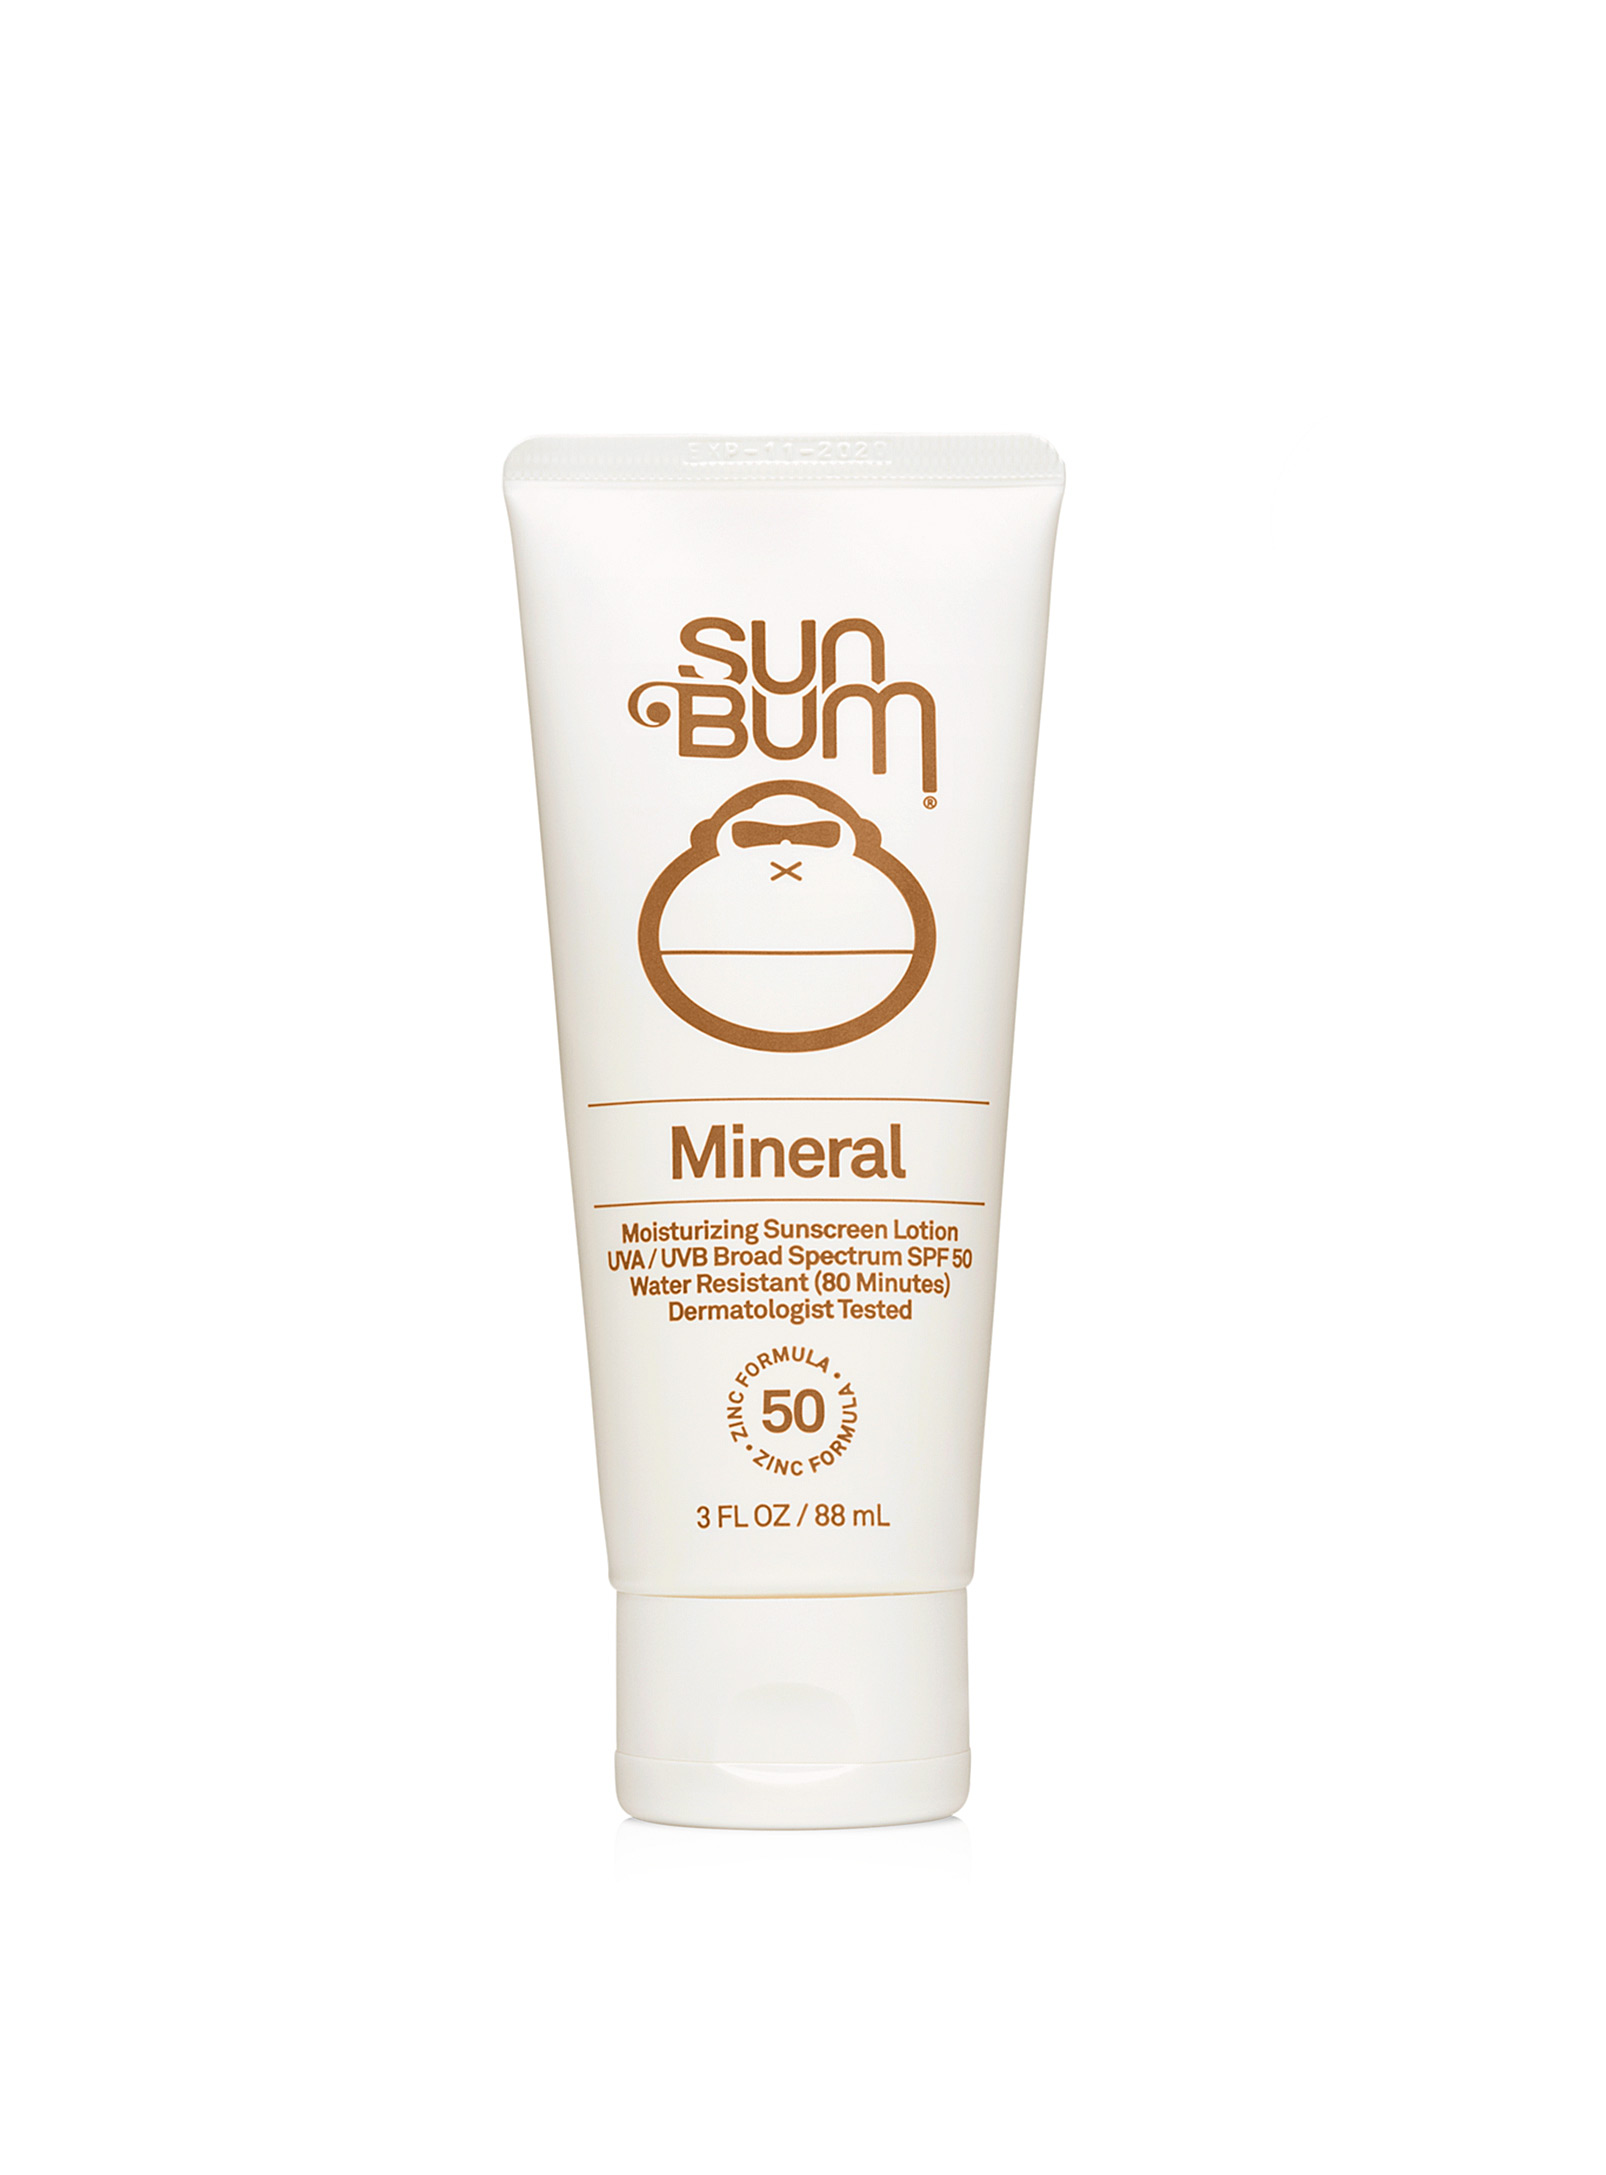 Sun Bum Mineral Spf 50 Sunscreen Lotion In White